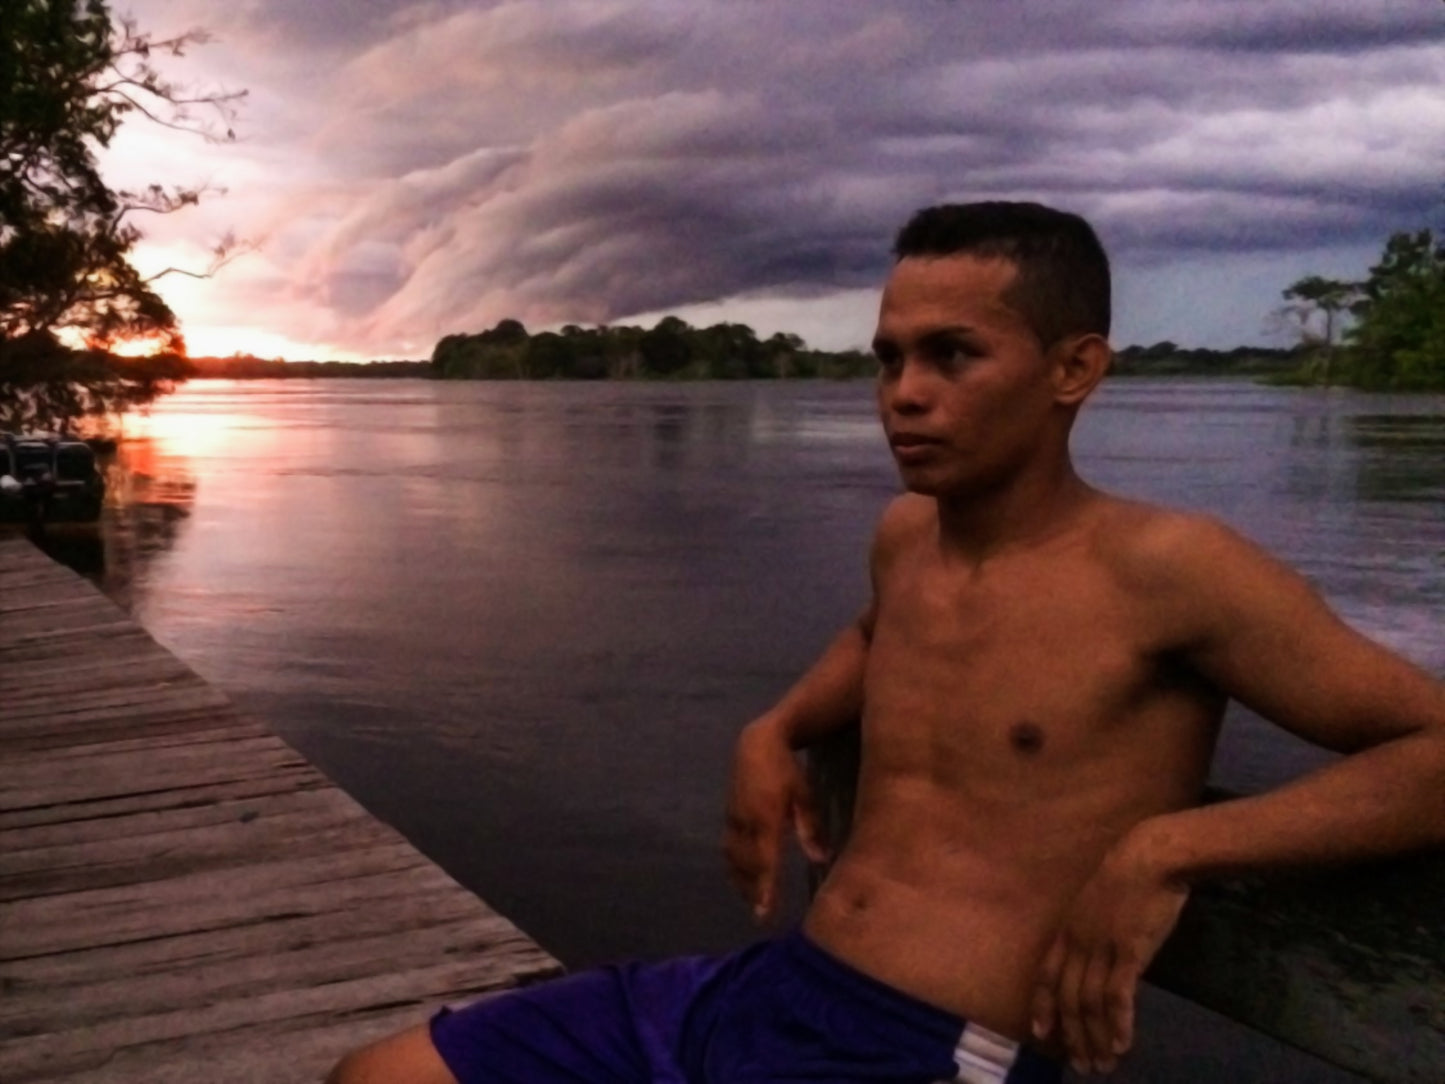 330 - Amazonian Boy, Amazon rainforest